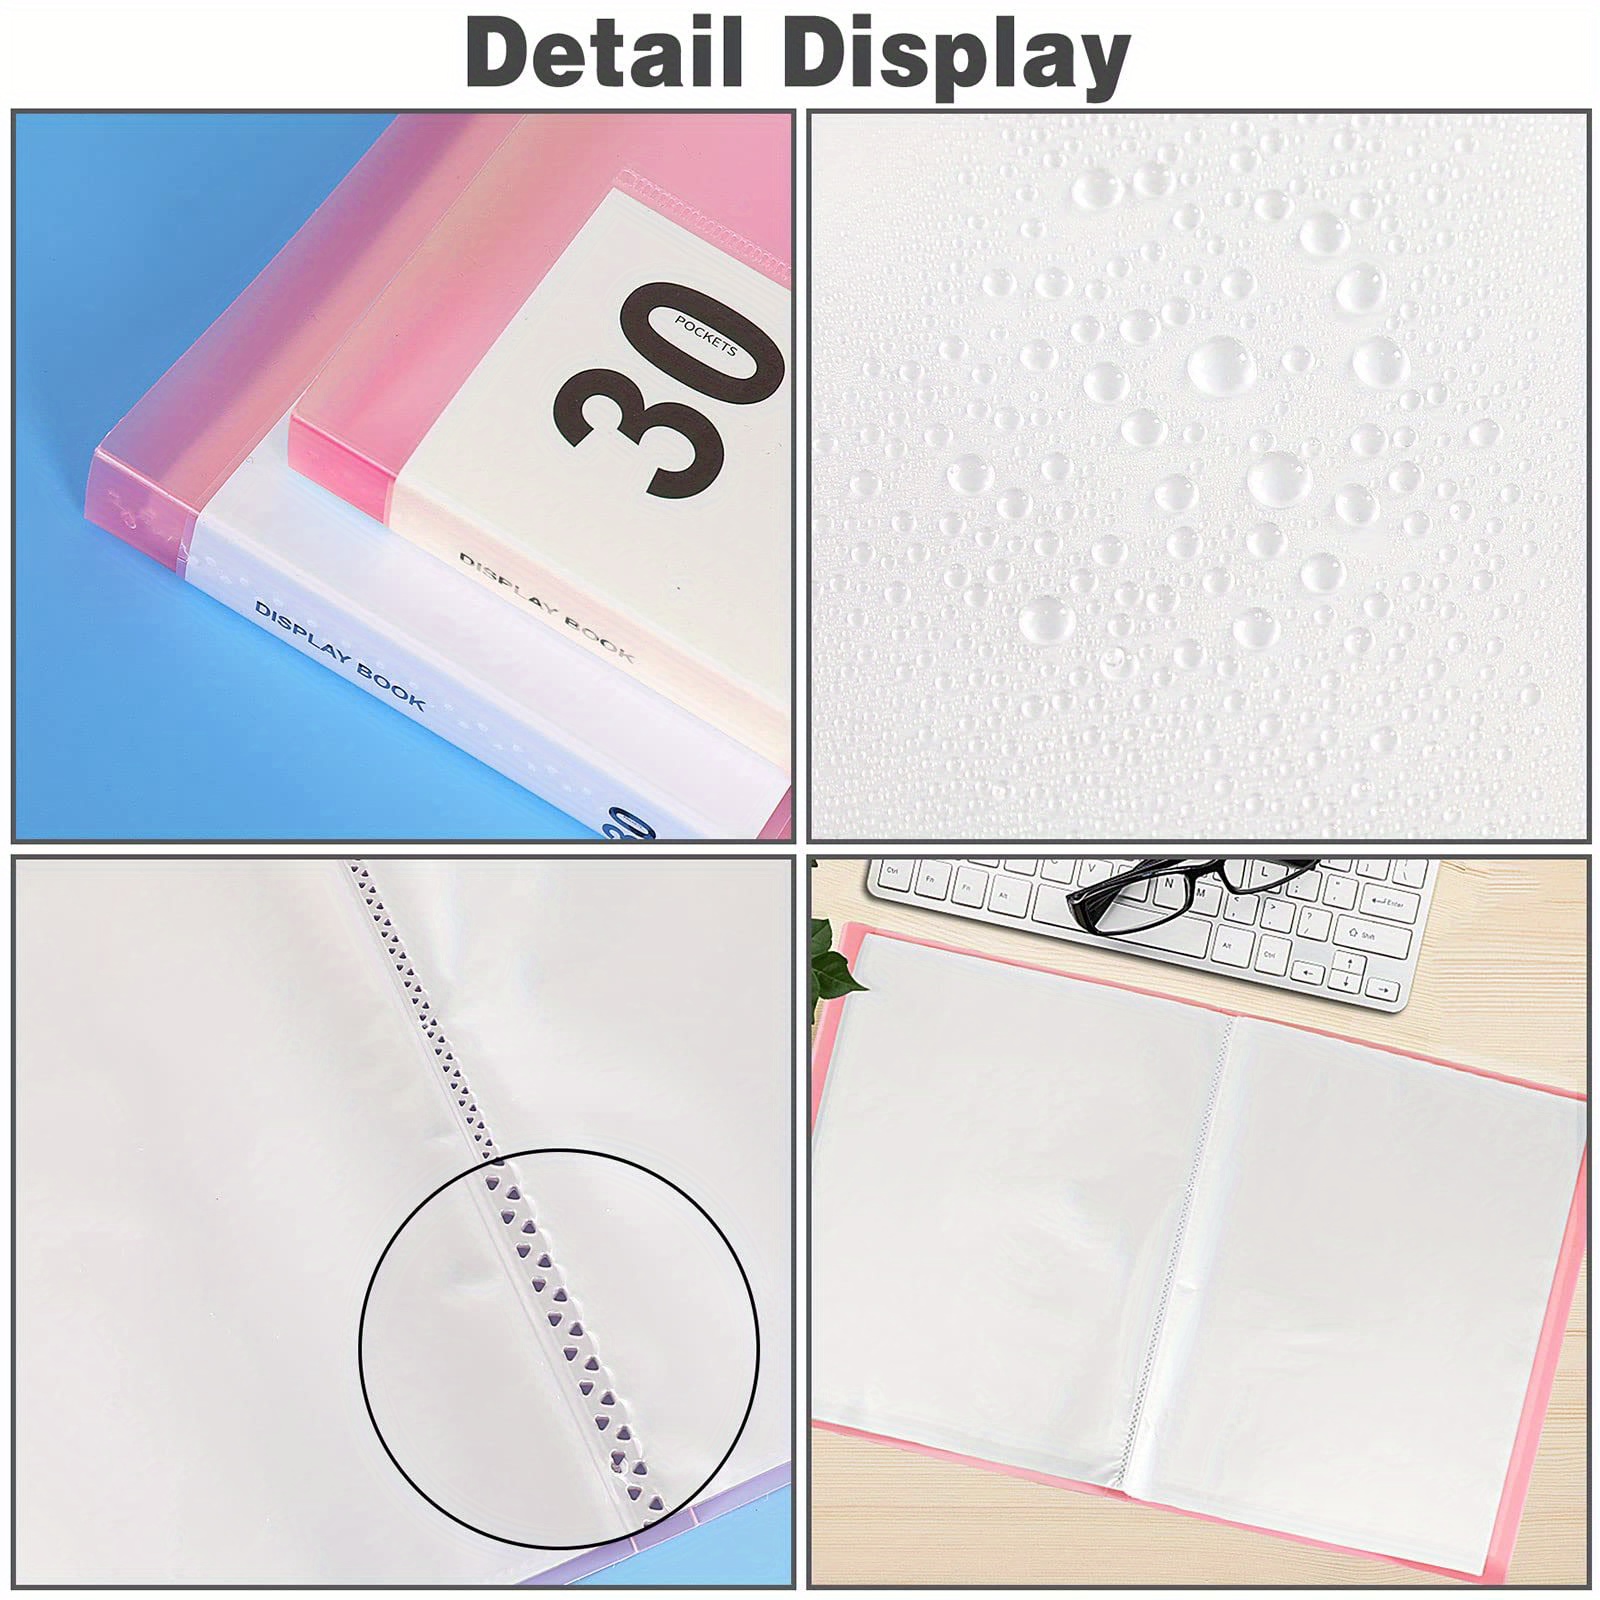 A3 Artificial Diamond Painting Storage Book Kits Artificial - Temu